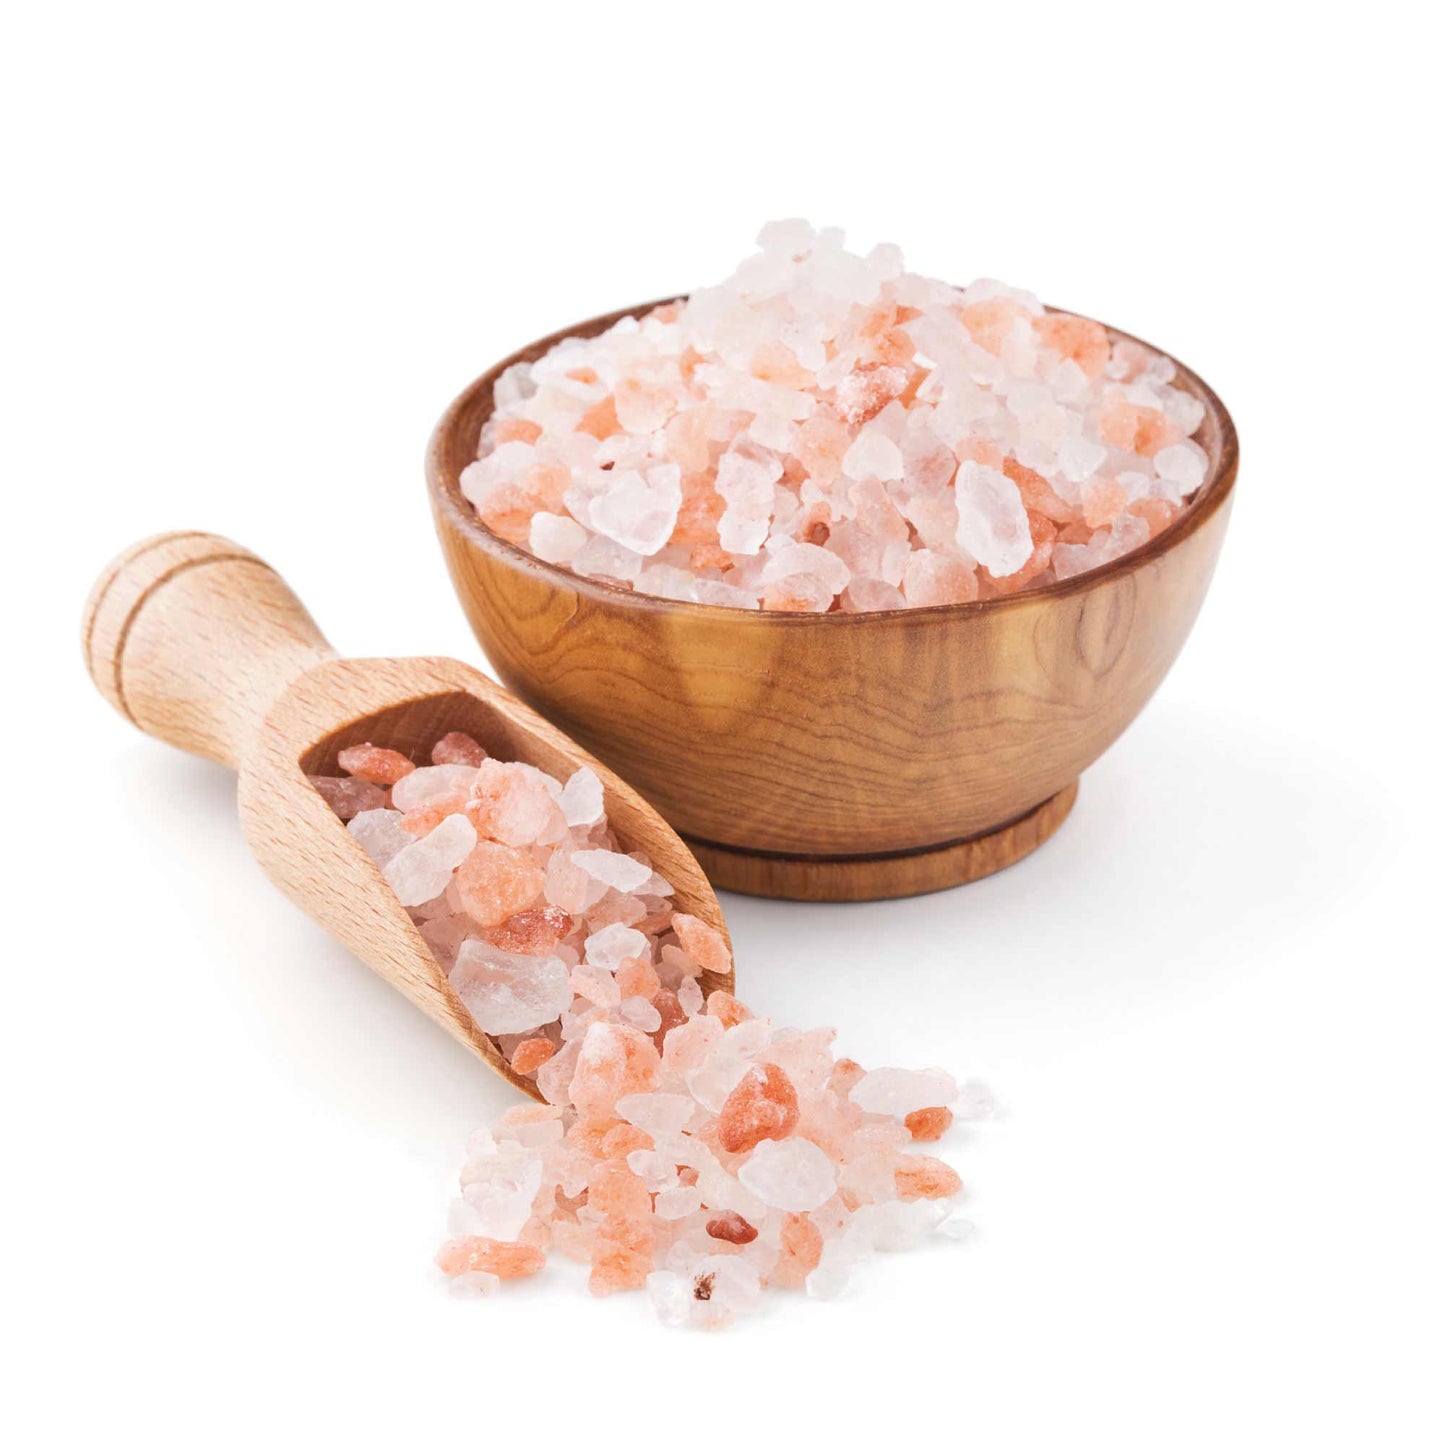 1Kg Pink Himalayan Bath Salts - Natural Crystal Rocks - Spa Therapy Body Scrub